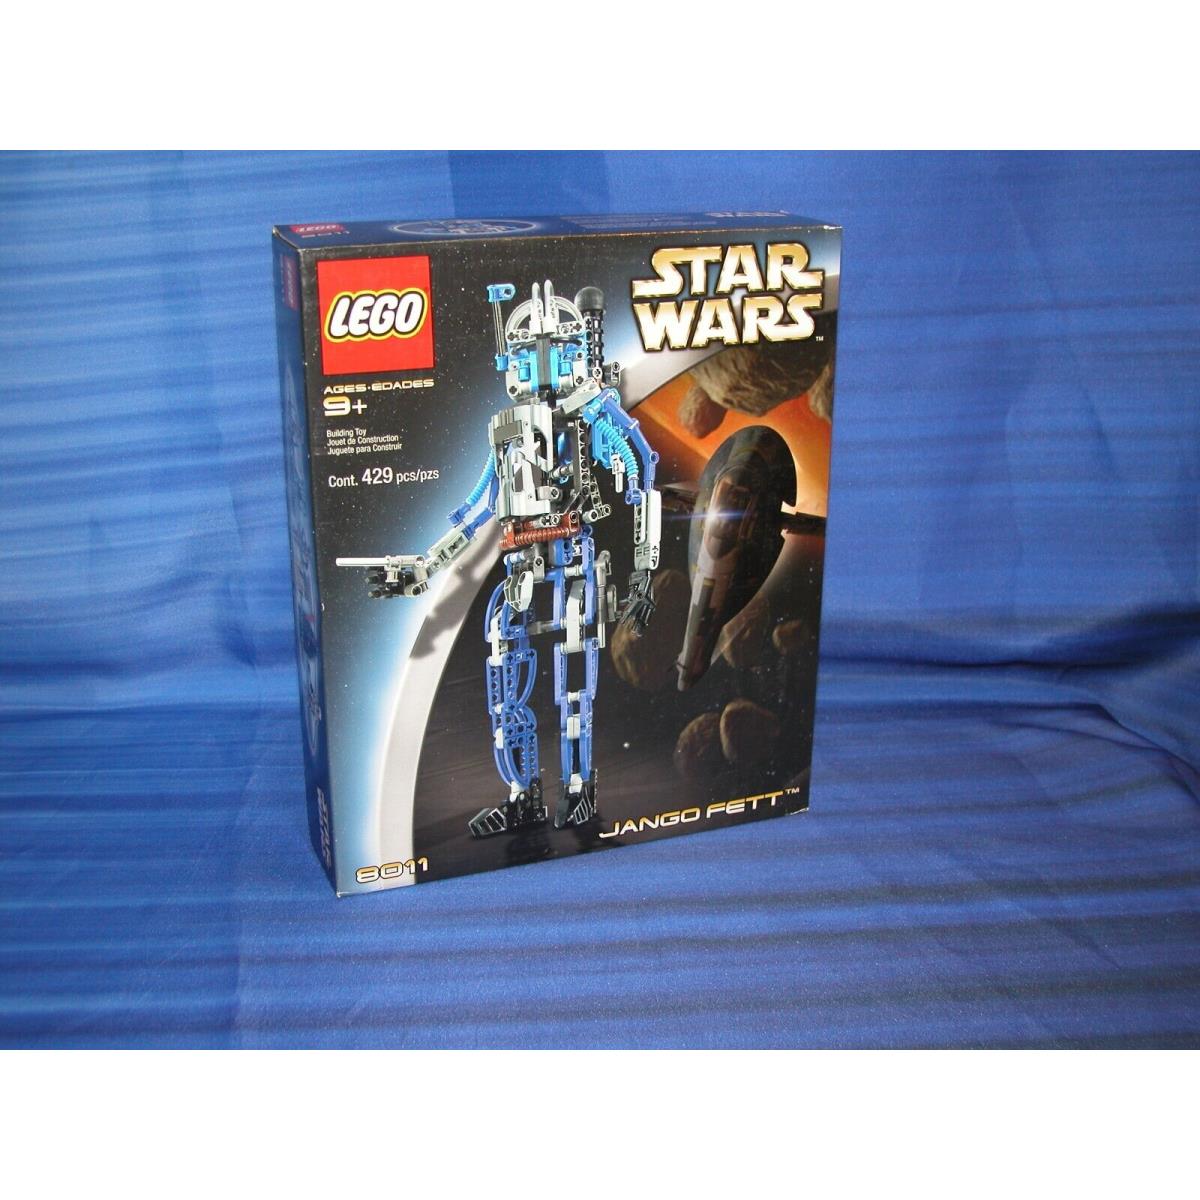 Lego Star Wars Set 8011 Jango Fett 2002 Retired